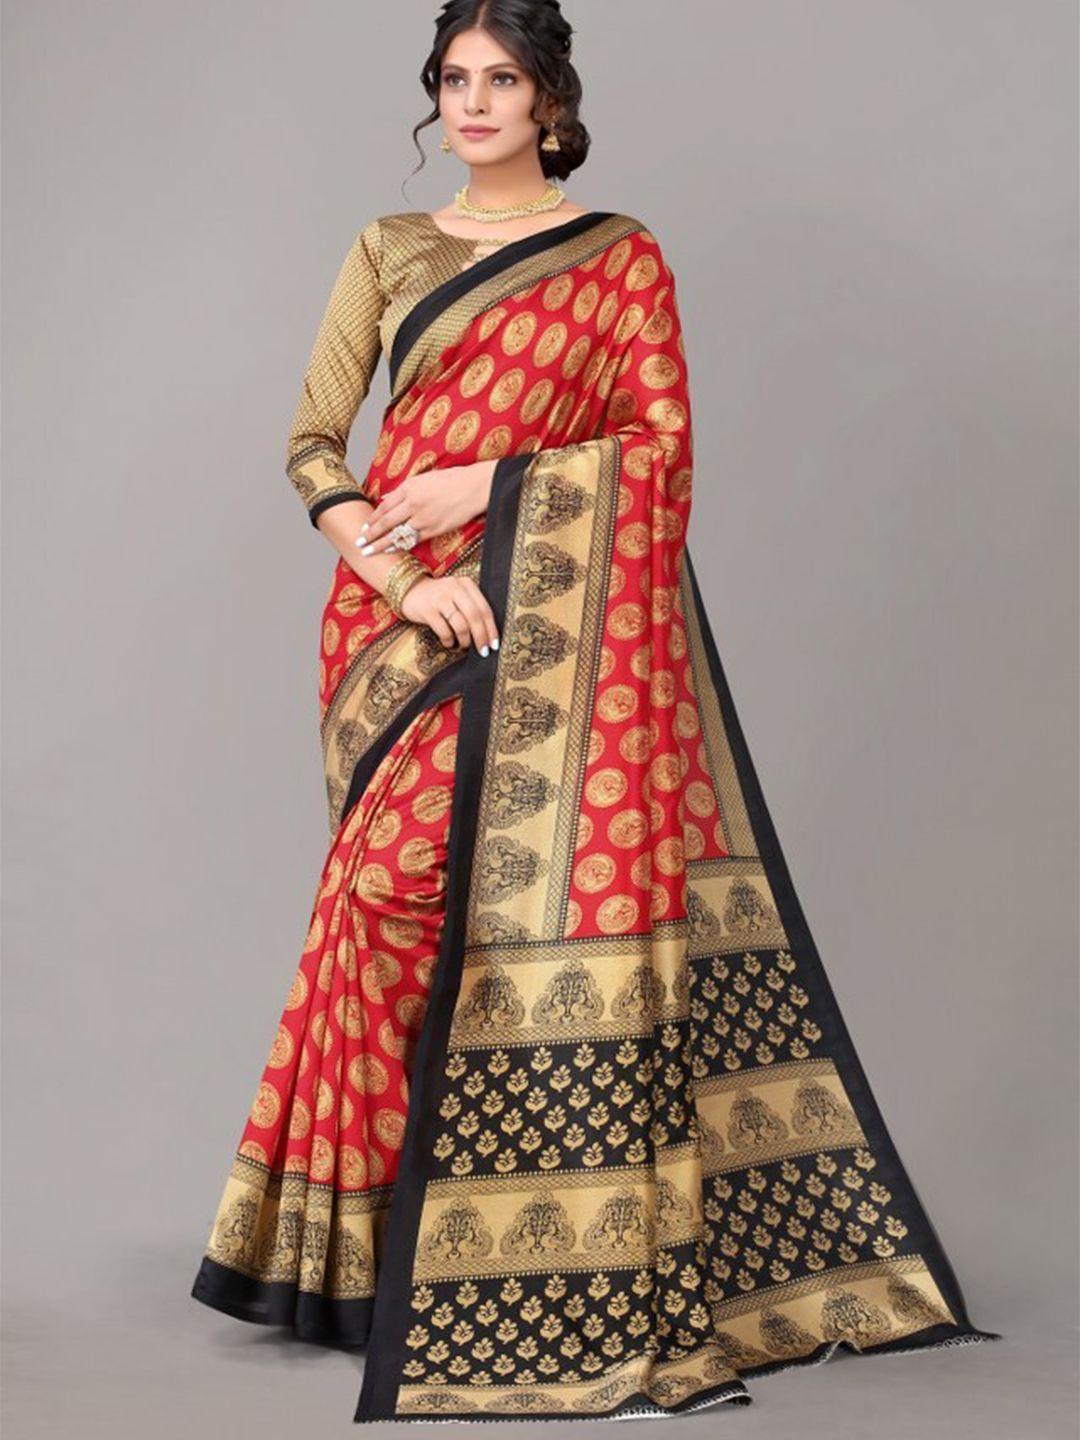 yashika red & black ethnic motifs art silk saree